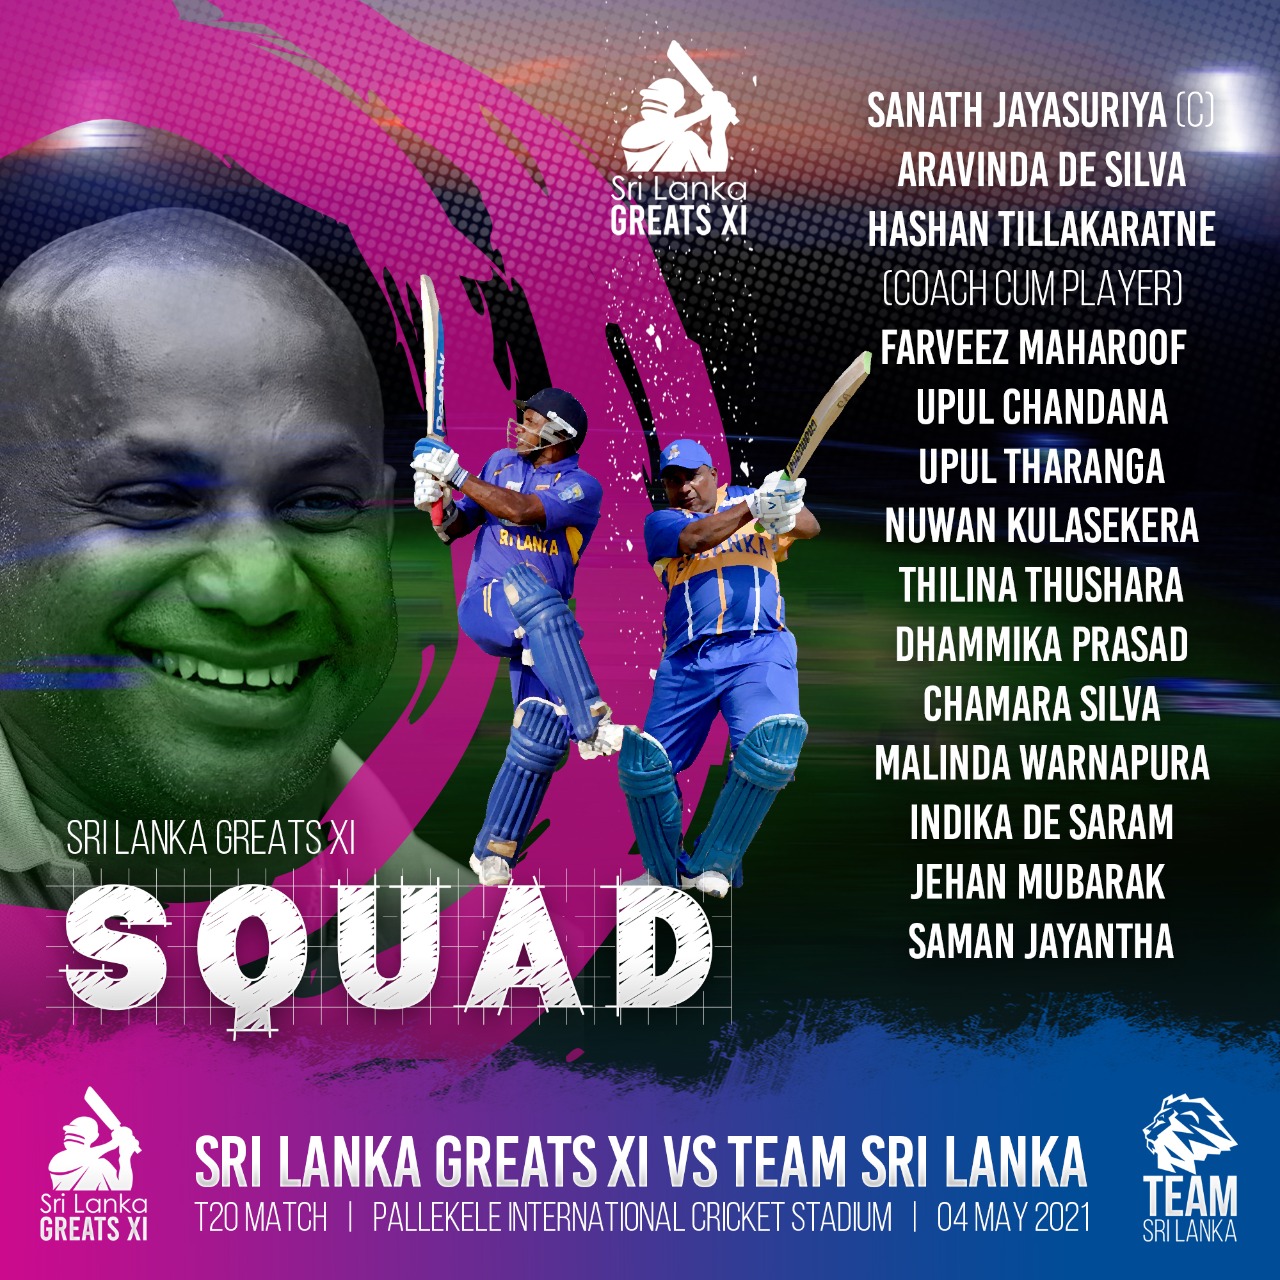 Sri Lanka Greats XI and Team Sri Lanka Charity Match | Squads